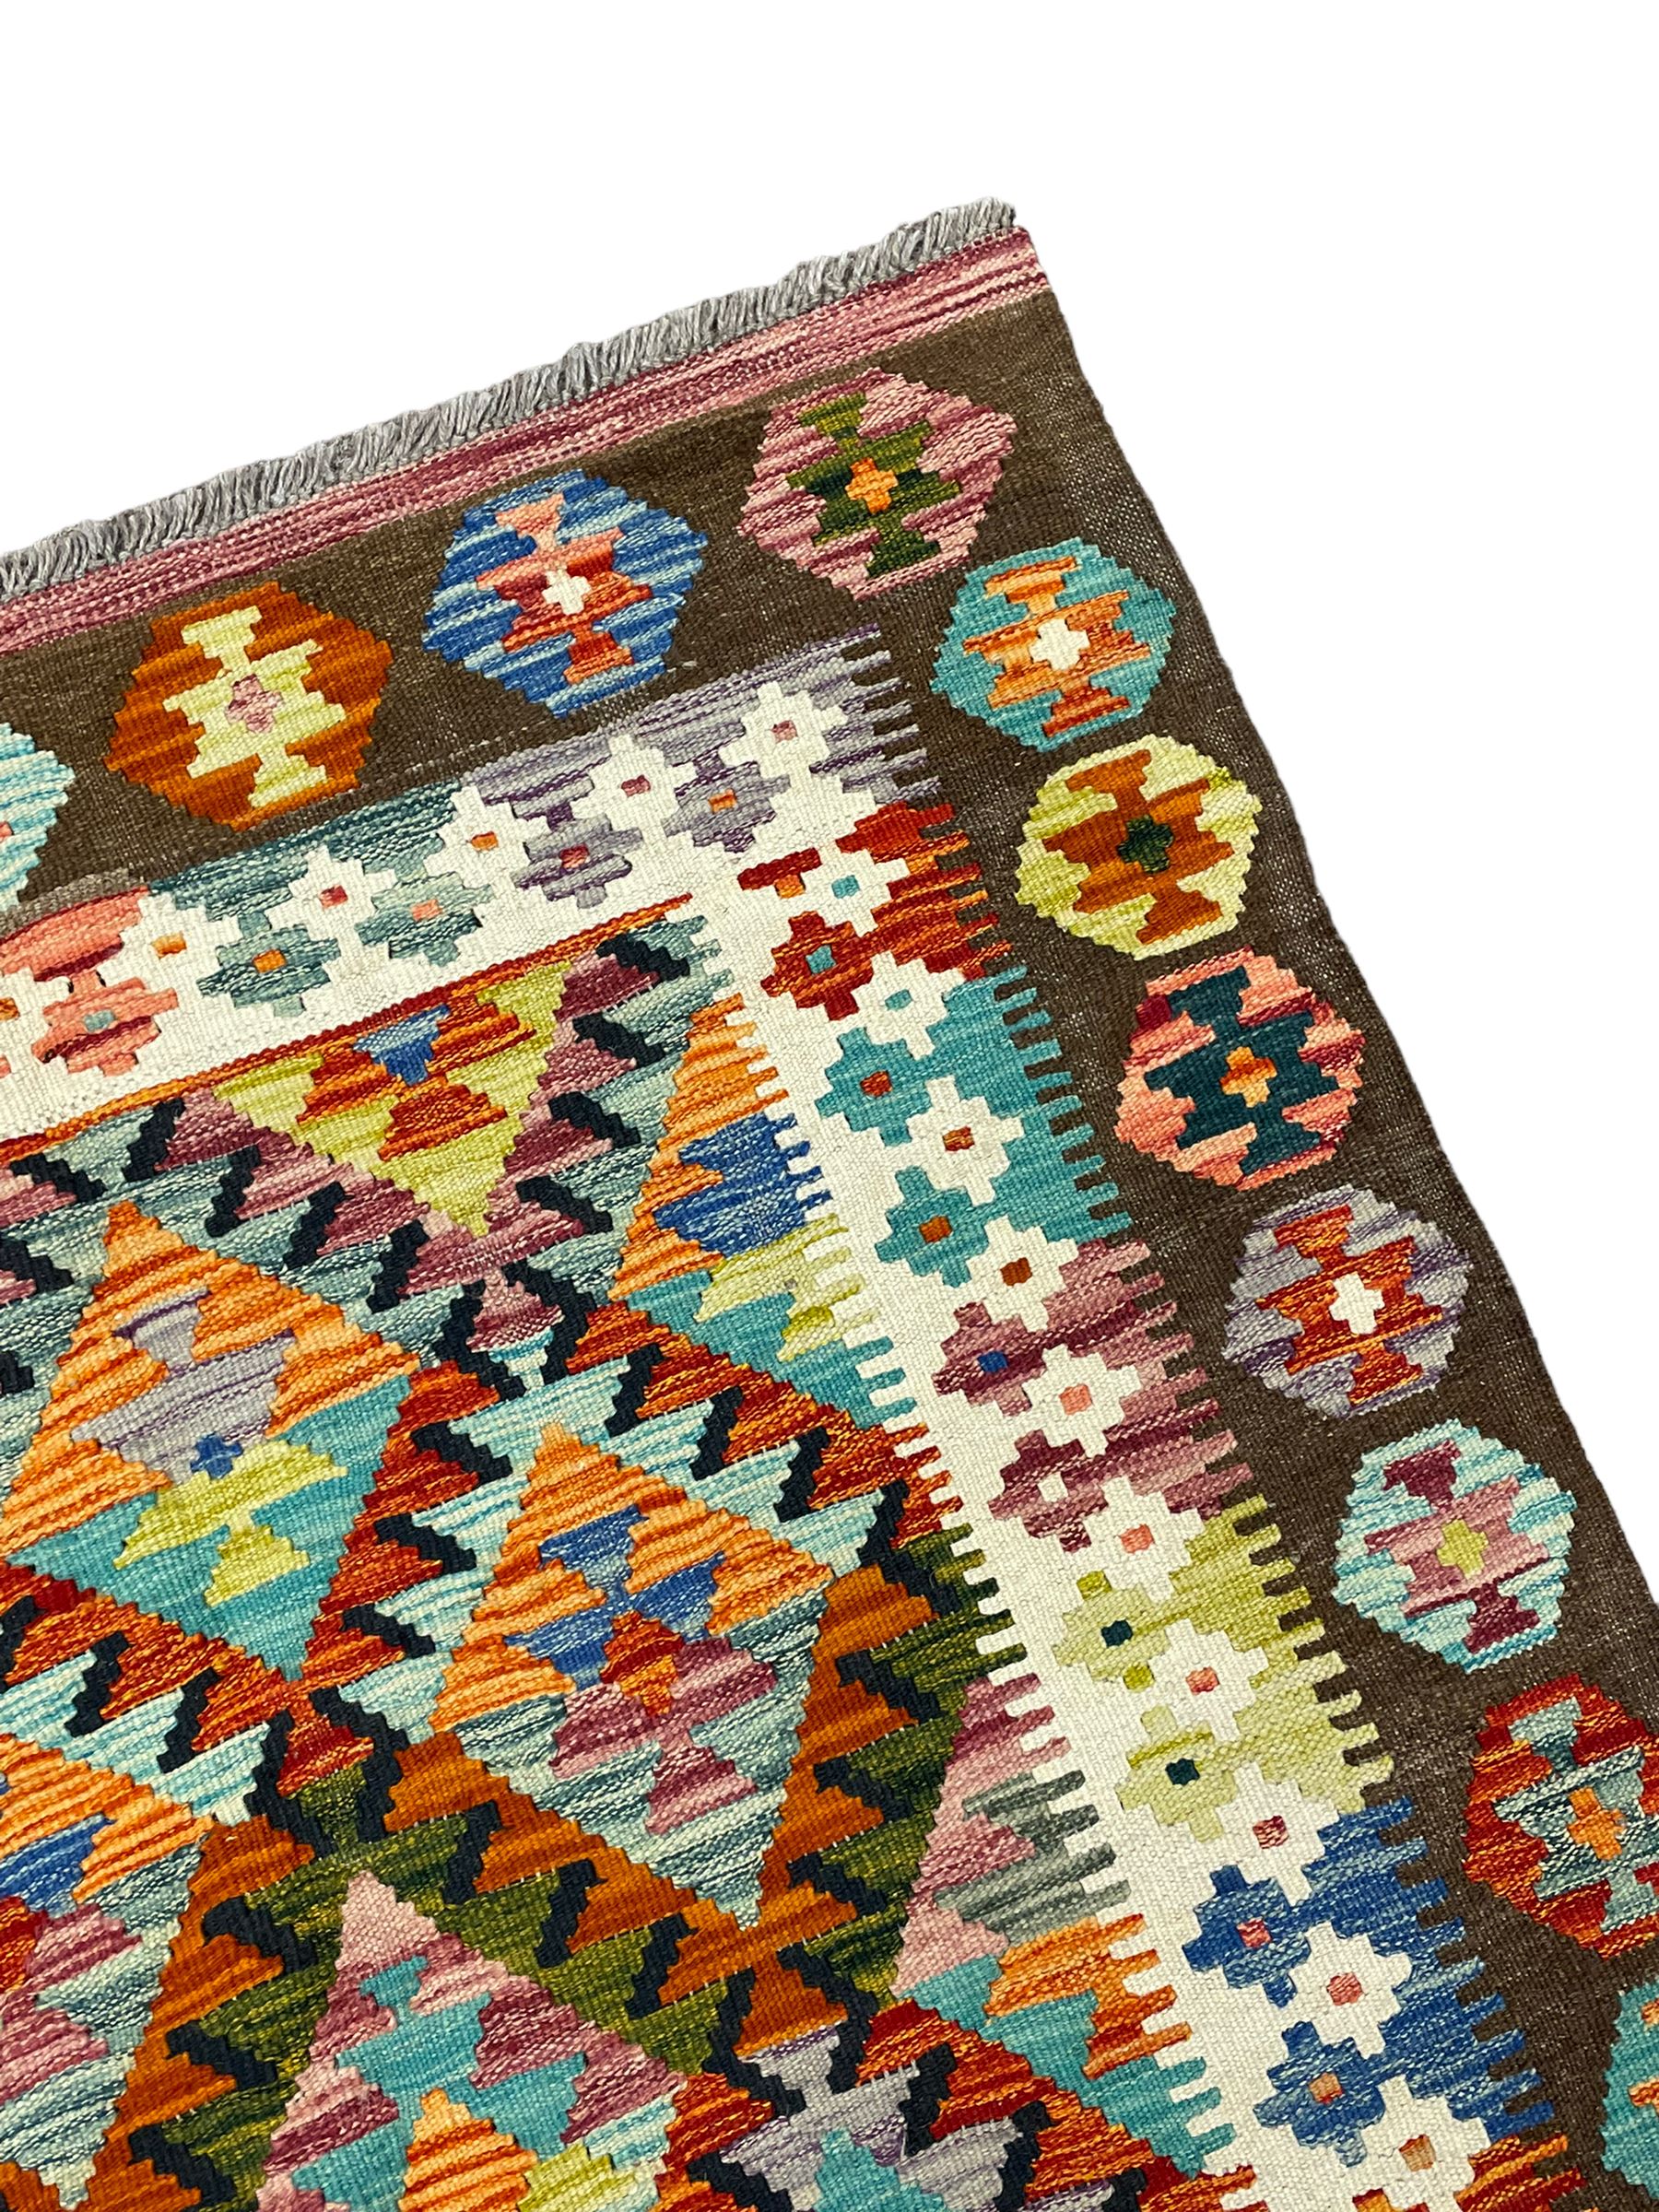 Chobi Kilim multi-colour rug - Image 2 of 5